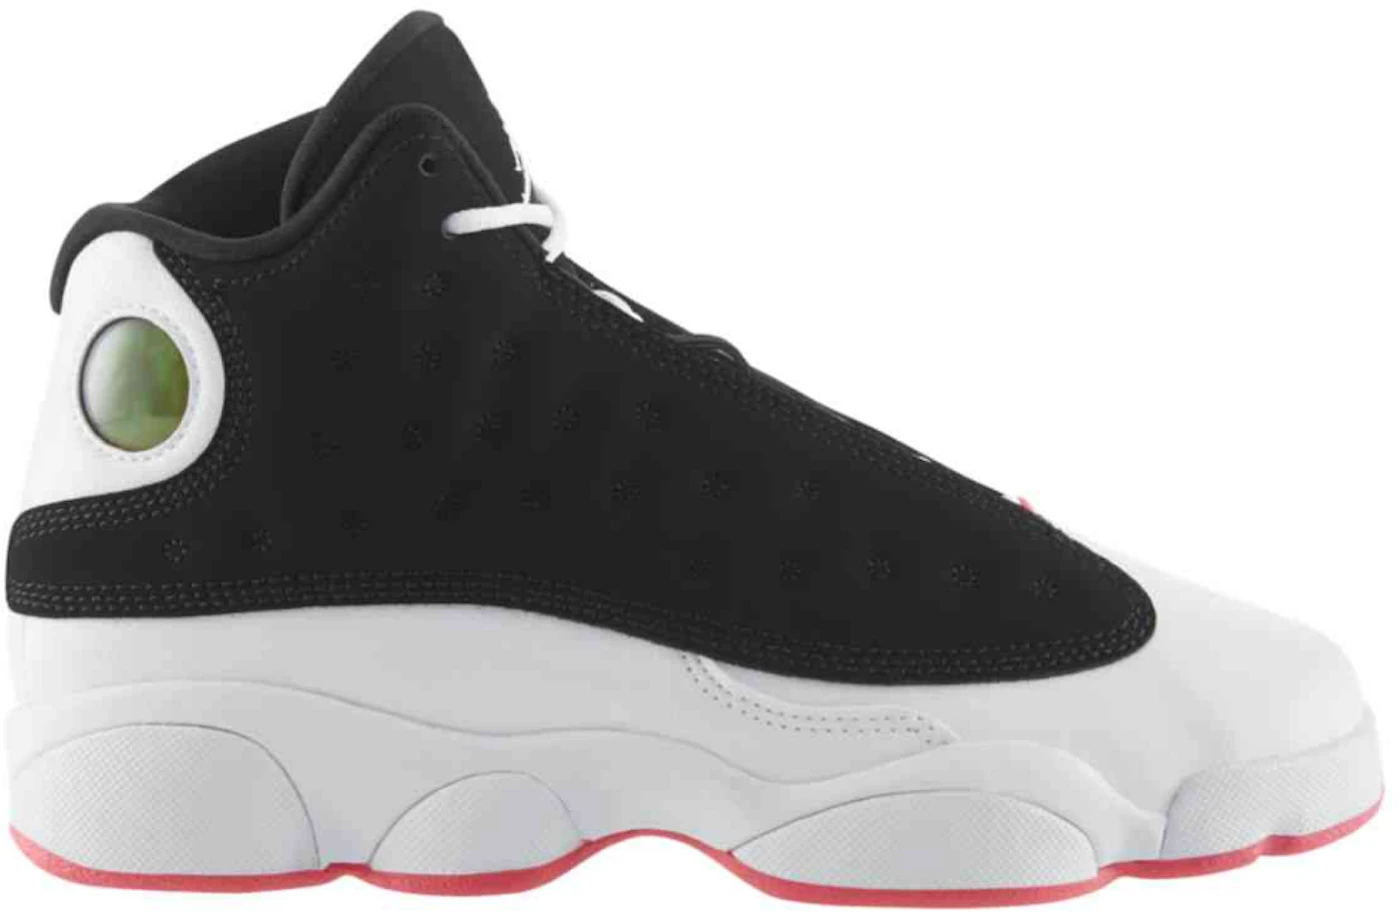 Nike Air Jordan 13 Retro "Fusion Pink" (TD). Size: 8C